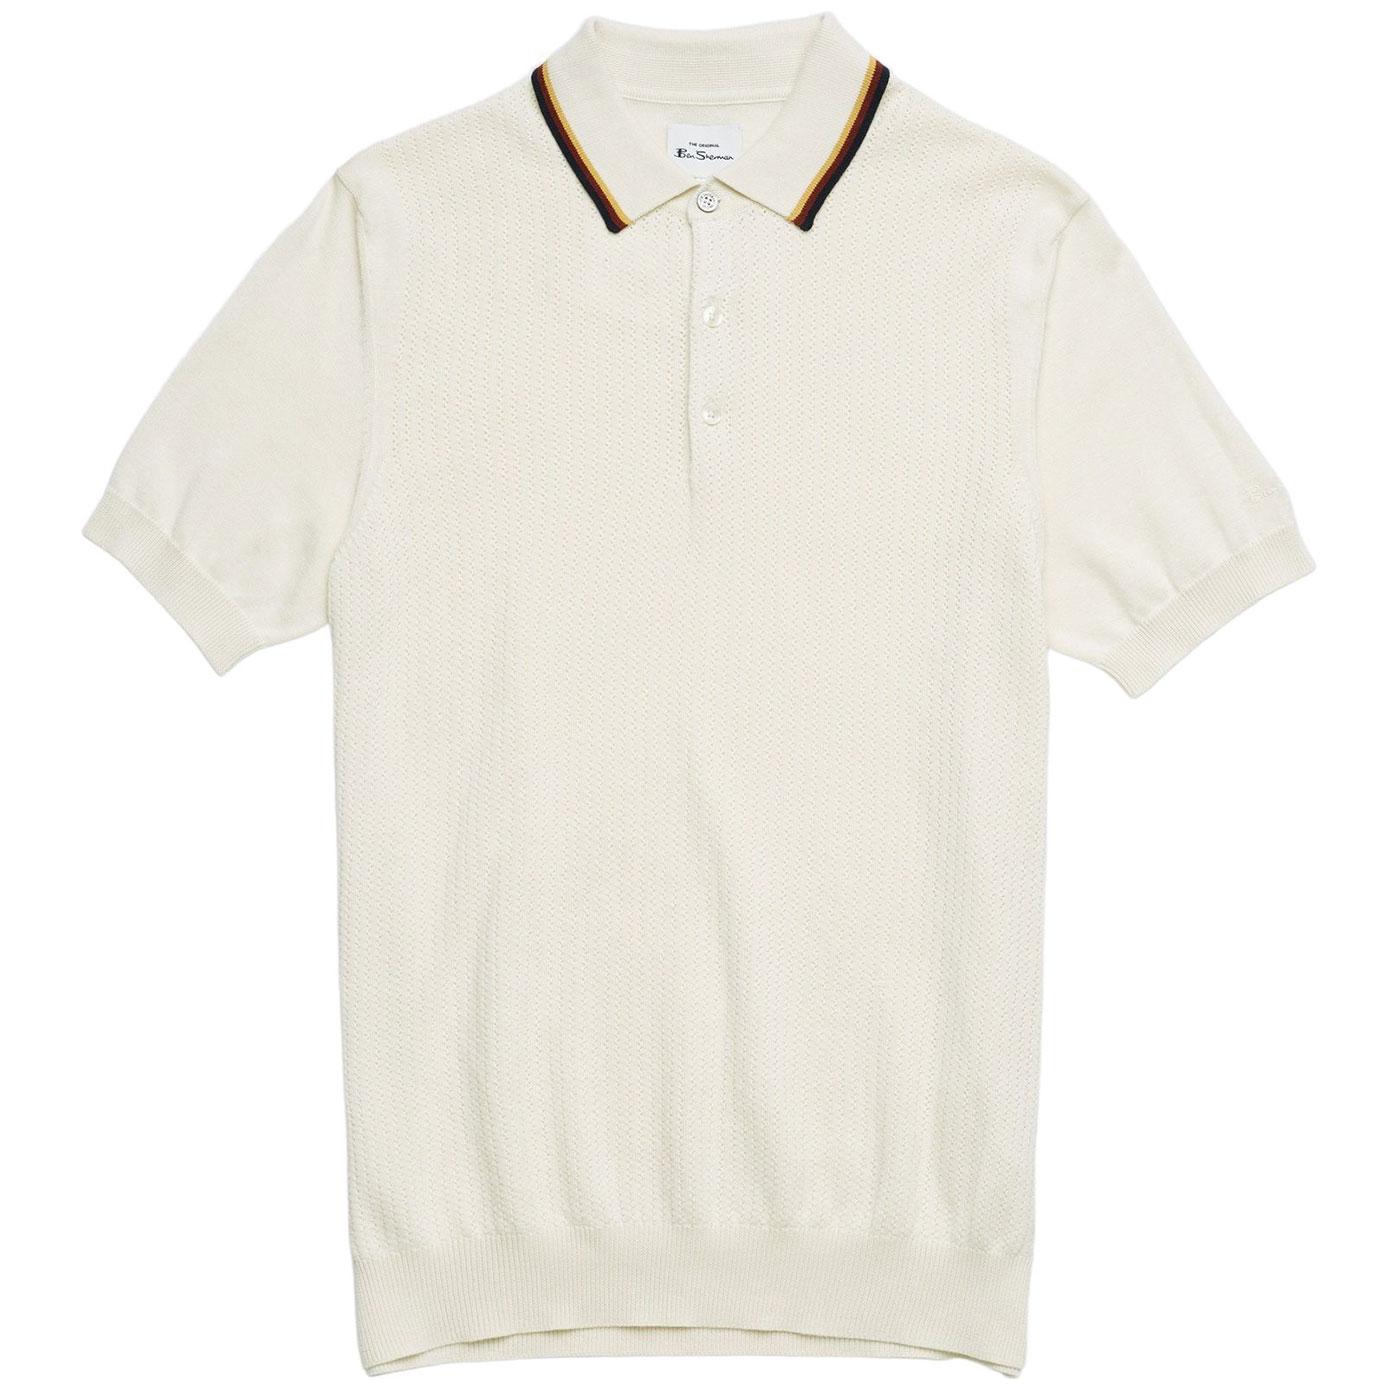 BEN SHERMAN Mens Retro Texture Knit Mod Polo Shirt